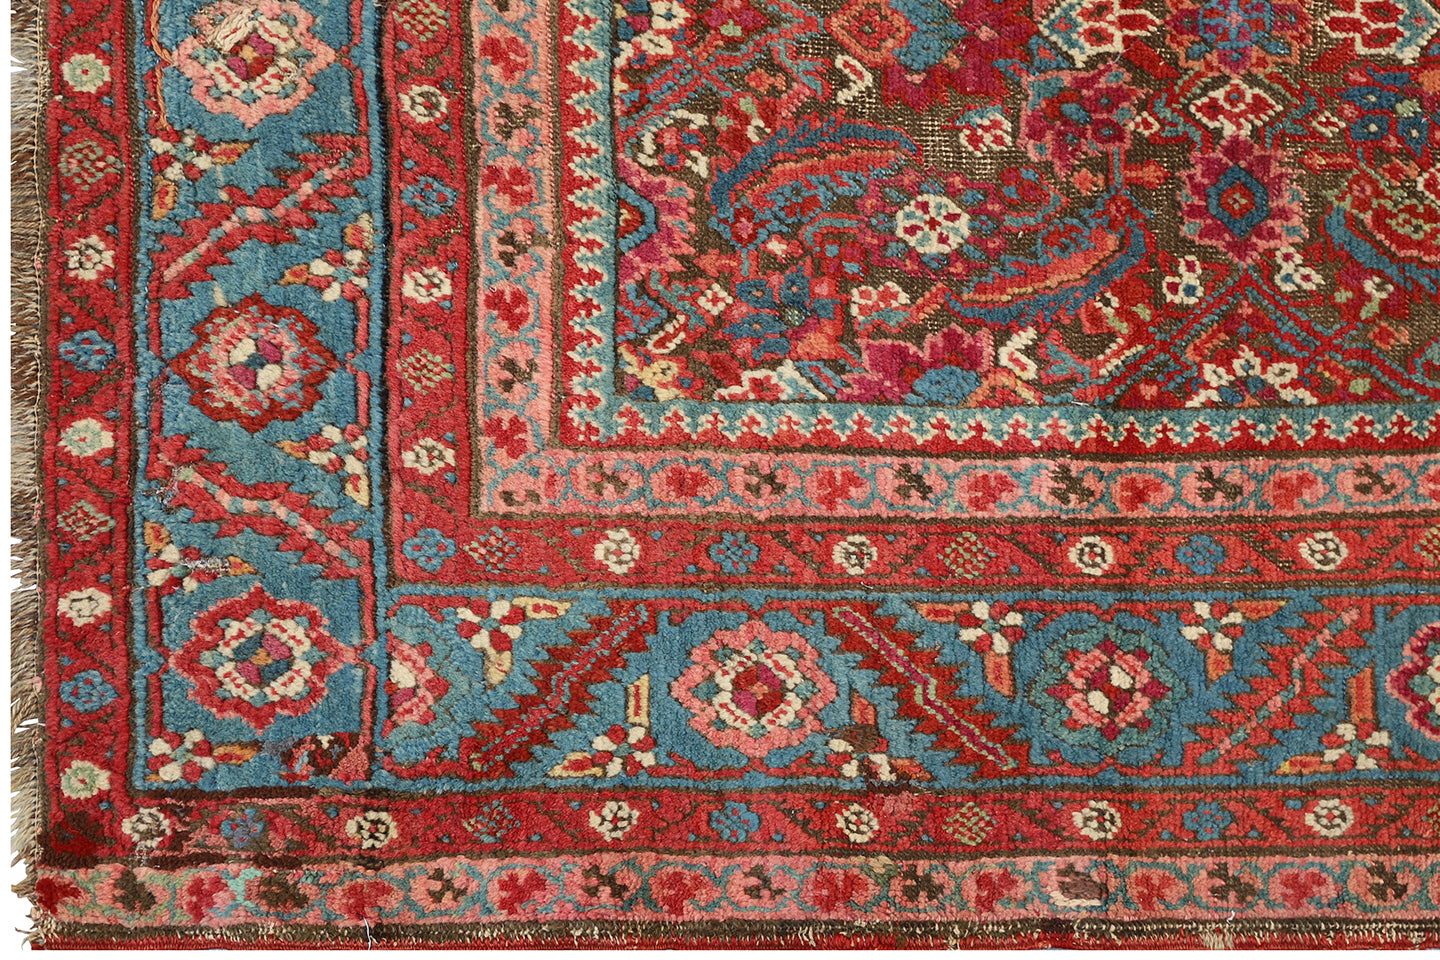 7'x13' Antique Brown Blue Pink Persian Mahal Rug